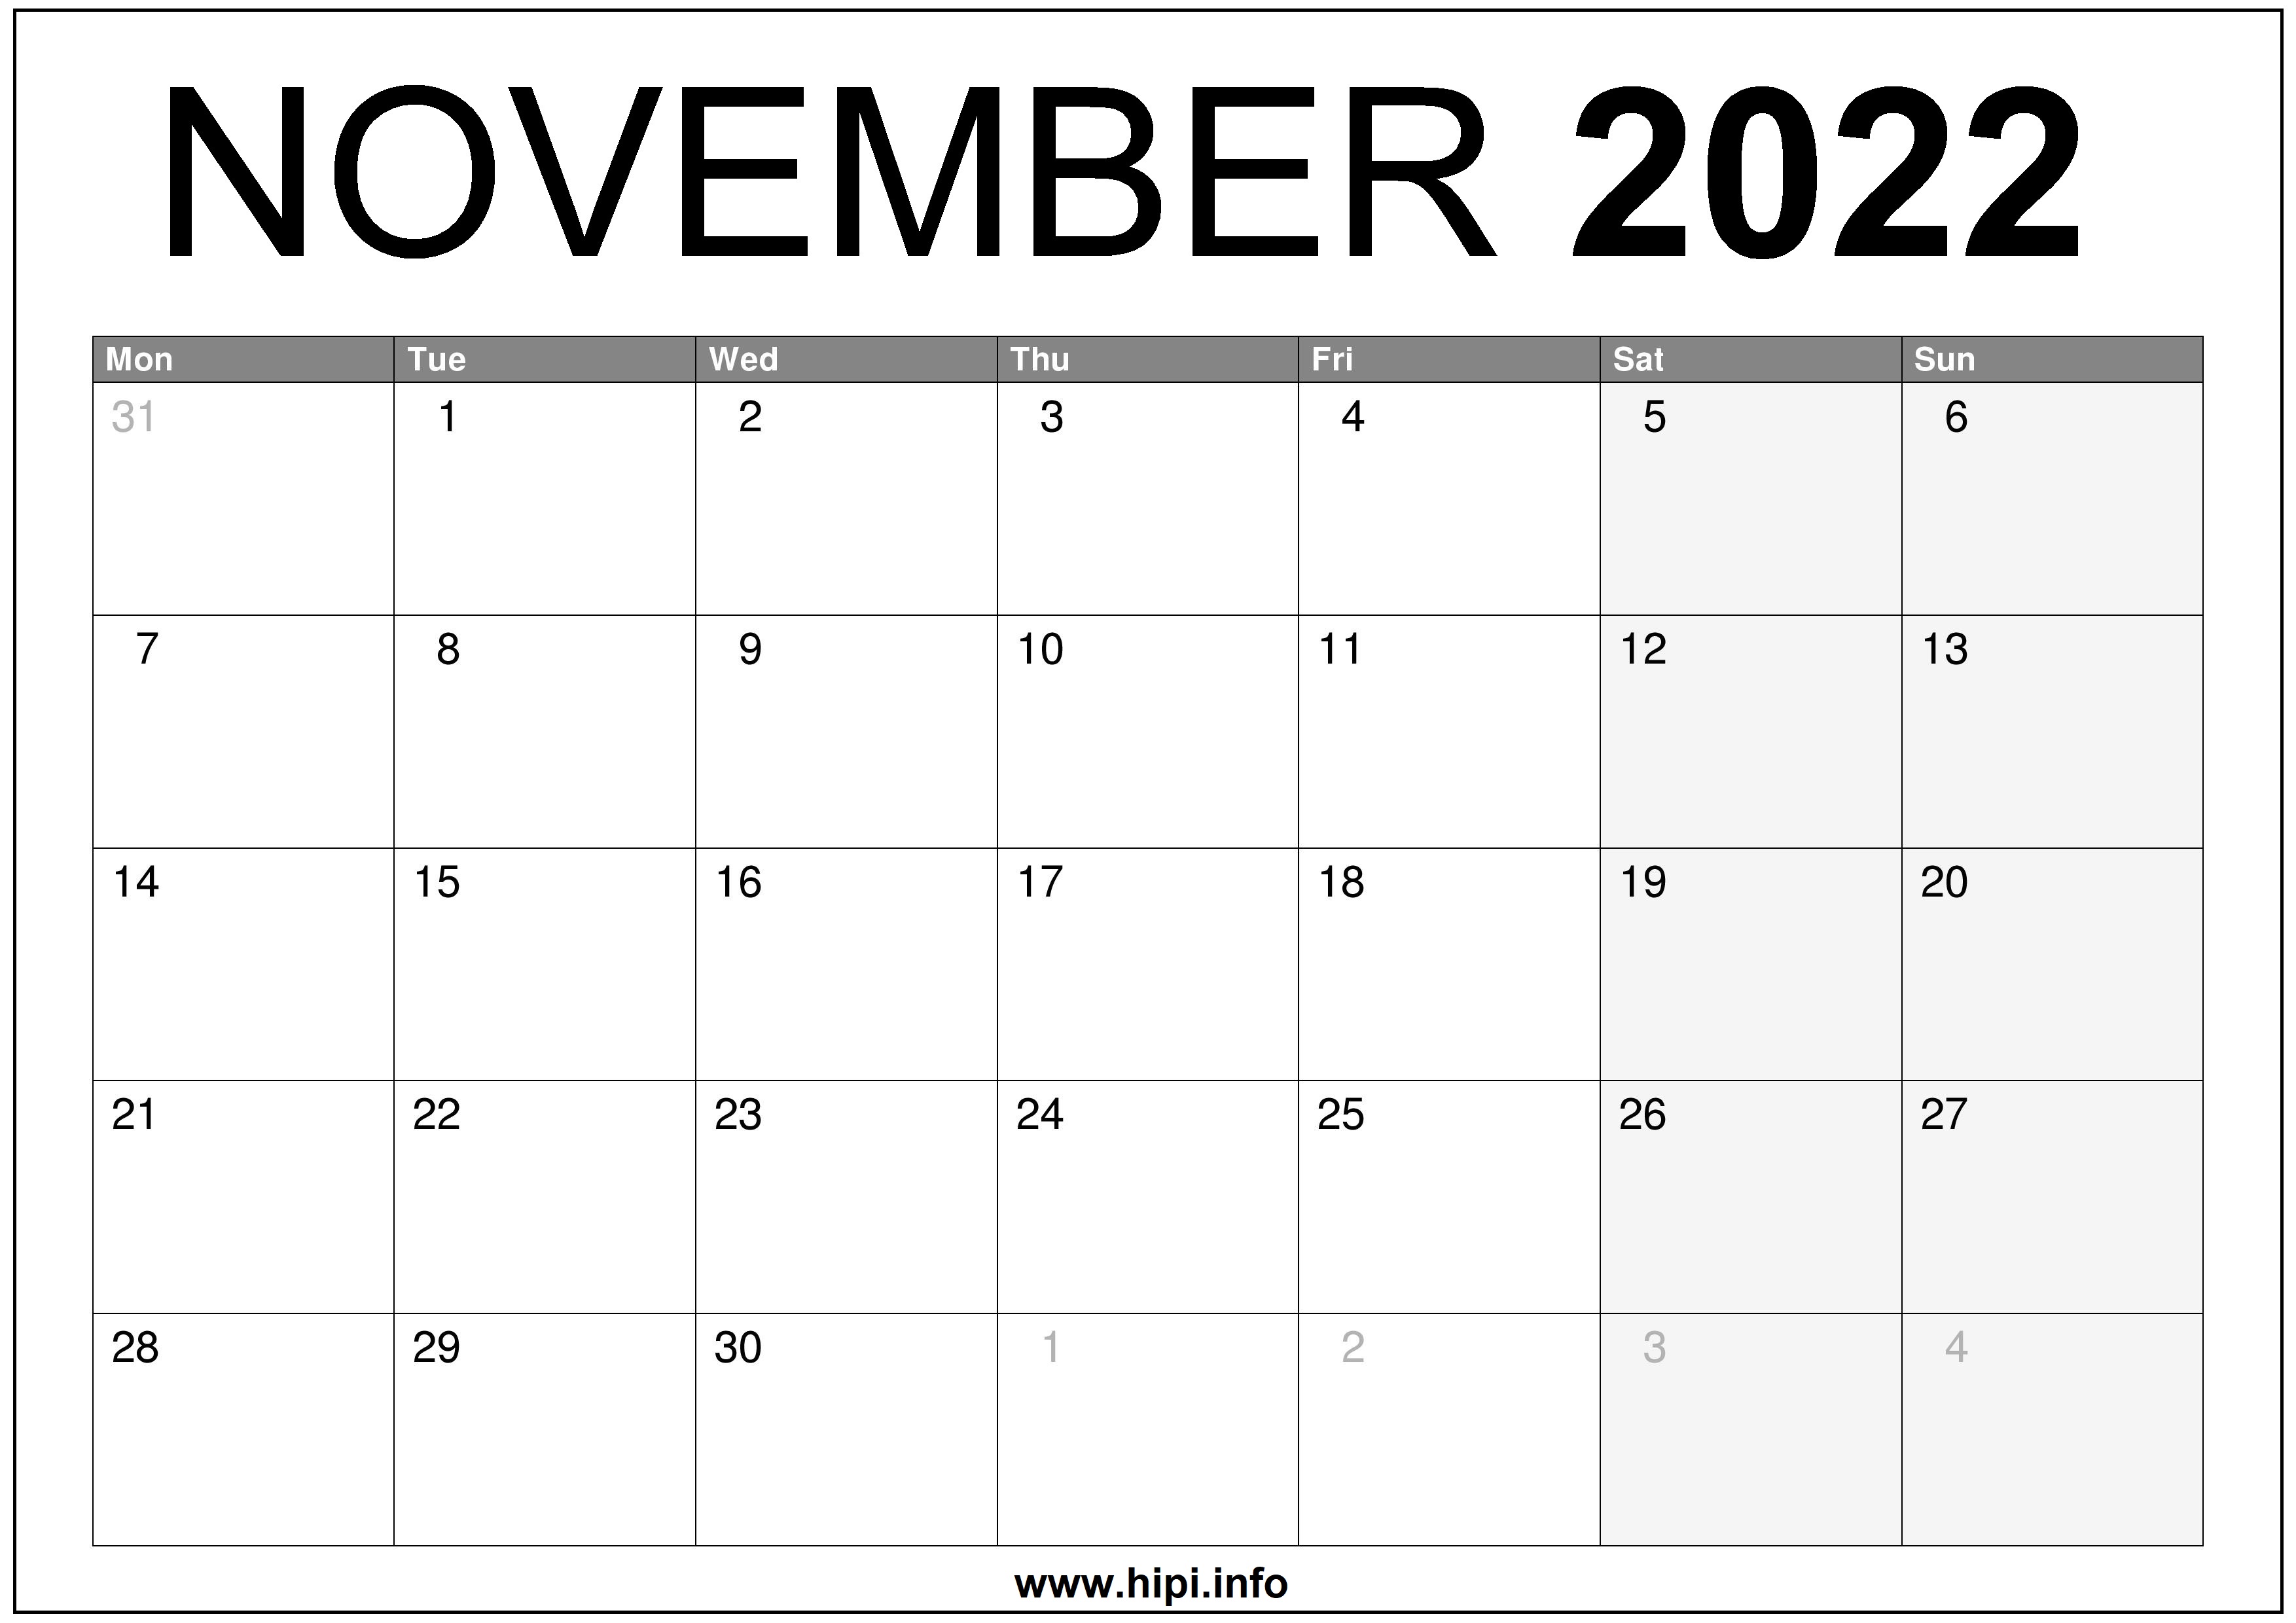 Nov 2022 Printable Calendar November 2022 Uk Calendar Printable Free - Hipi.info | Calendars Printable  Free